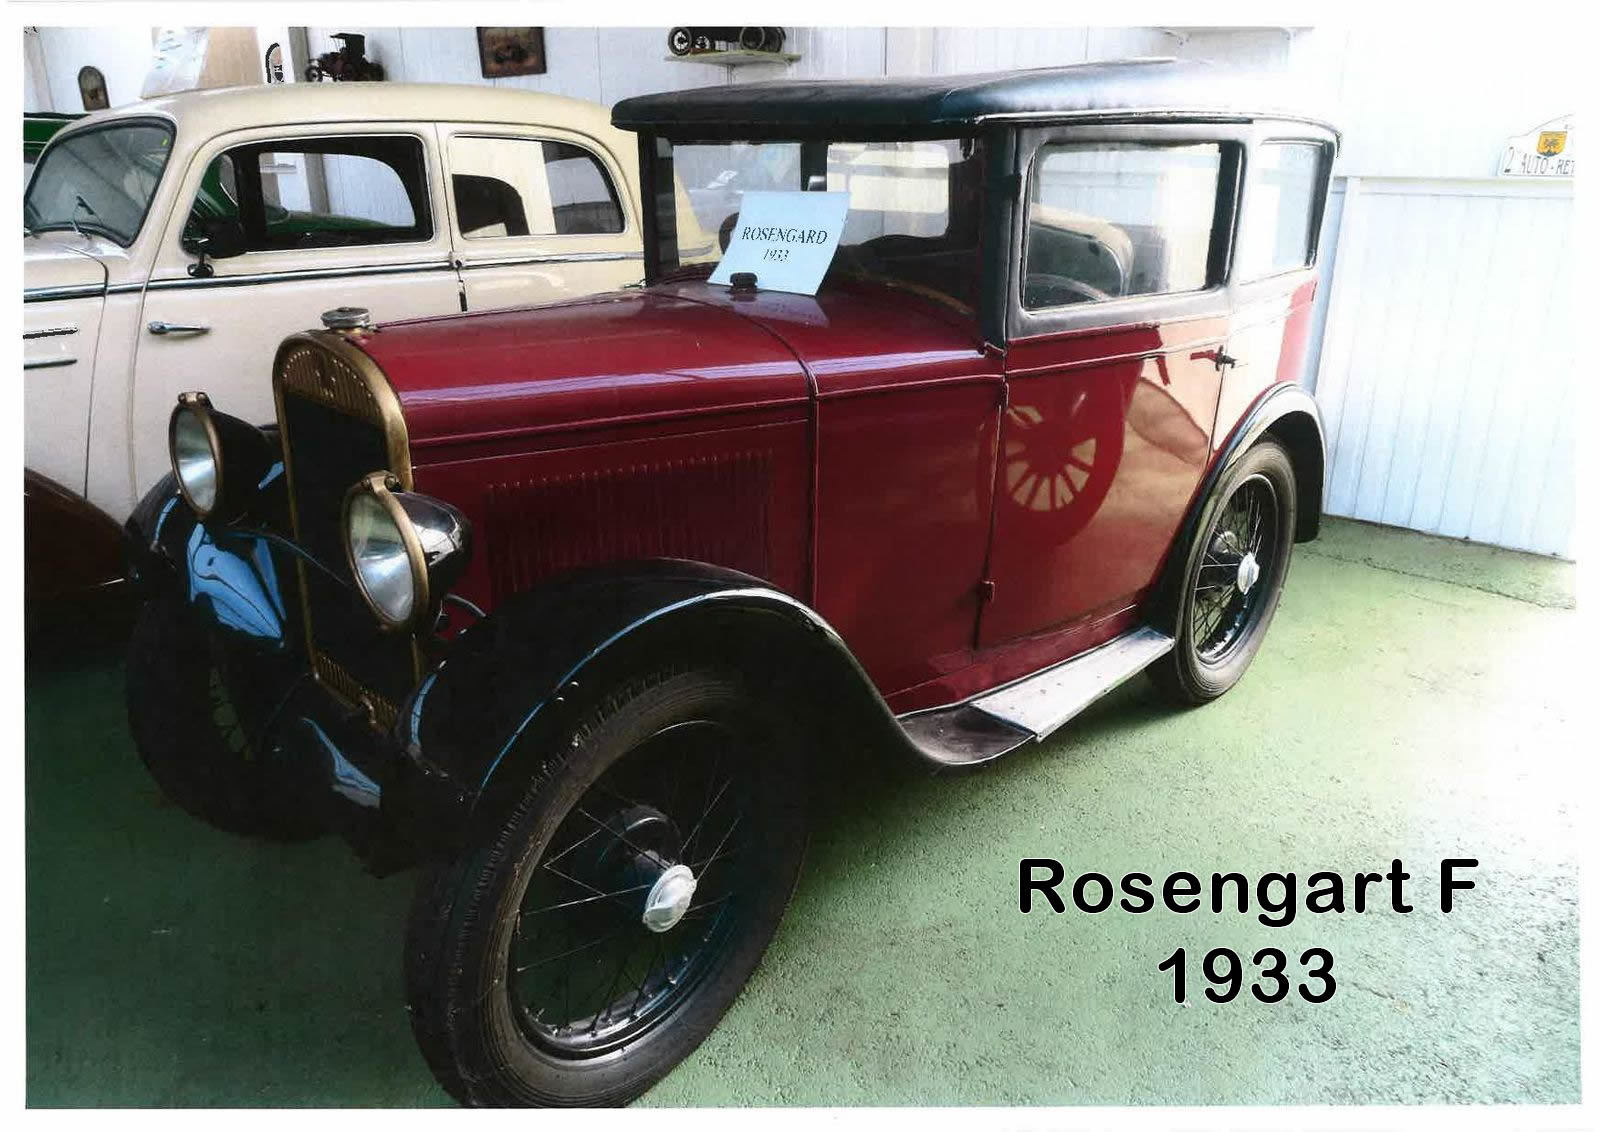 08 Rosengart F 1933